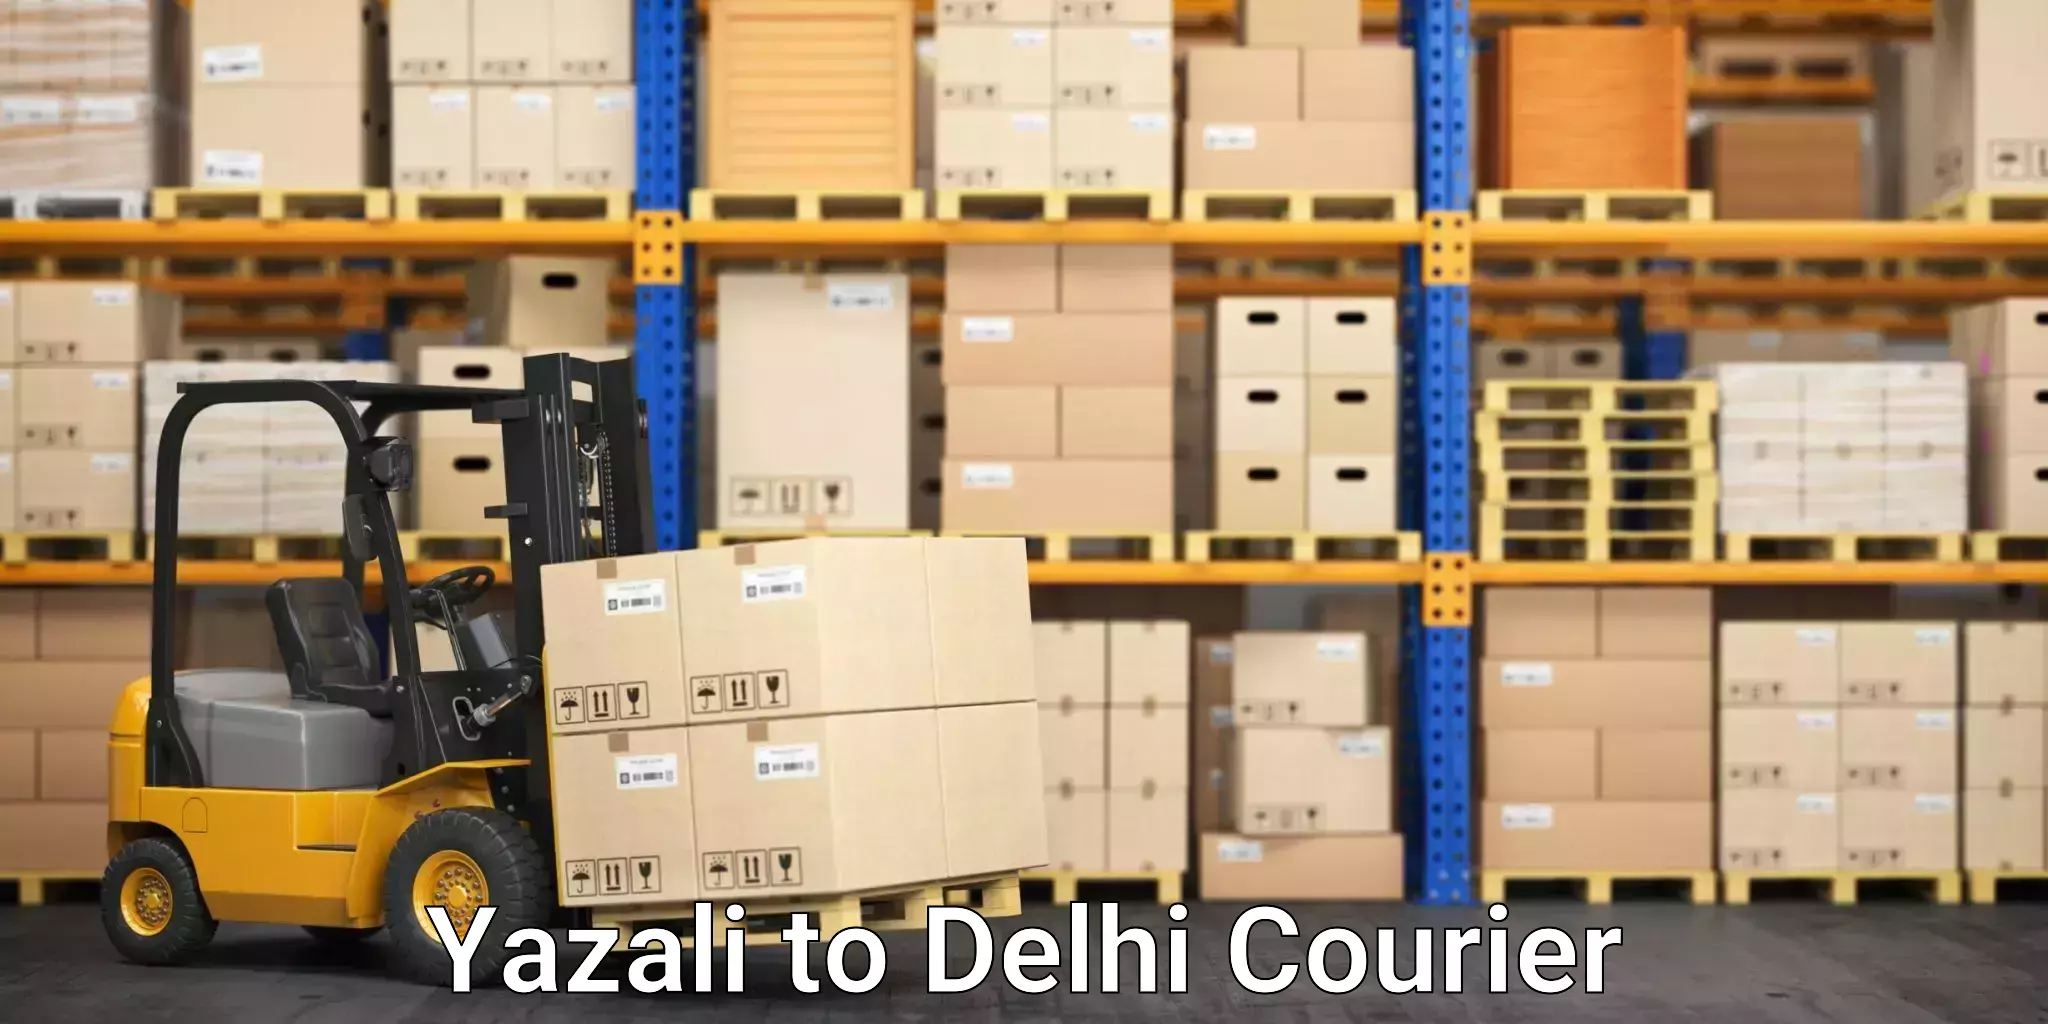 Smart shipping technology Yazali to Lodhi Road